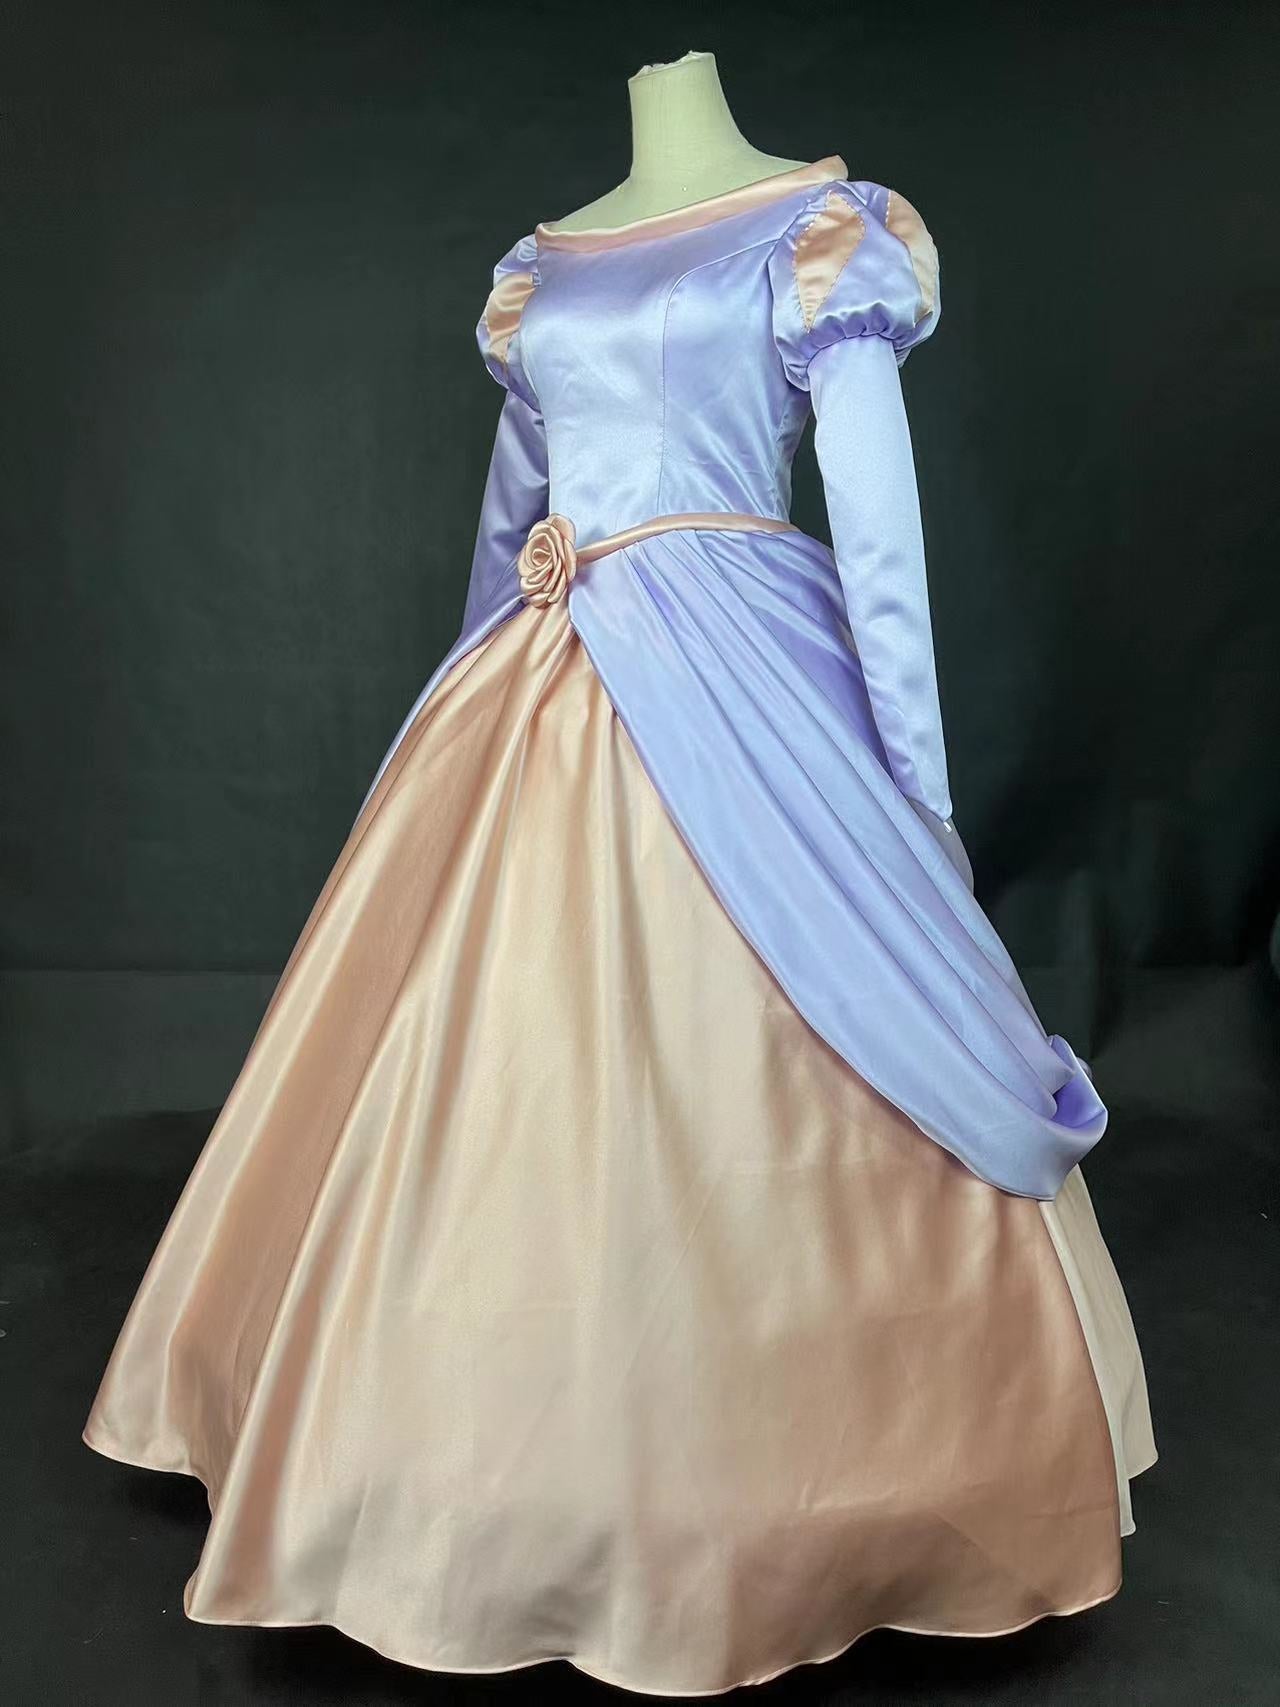 The little Mermaid Ariel Princess Dress Cosplay Costumes